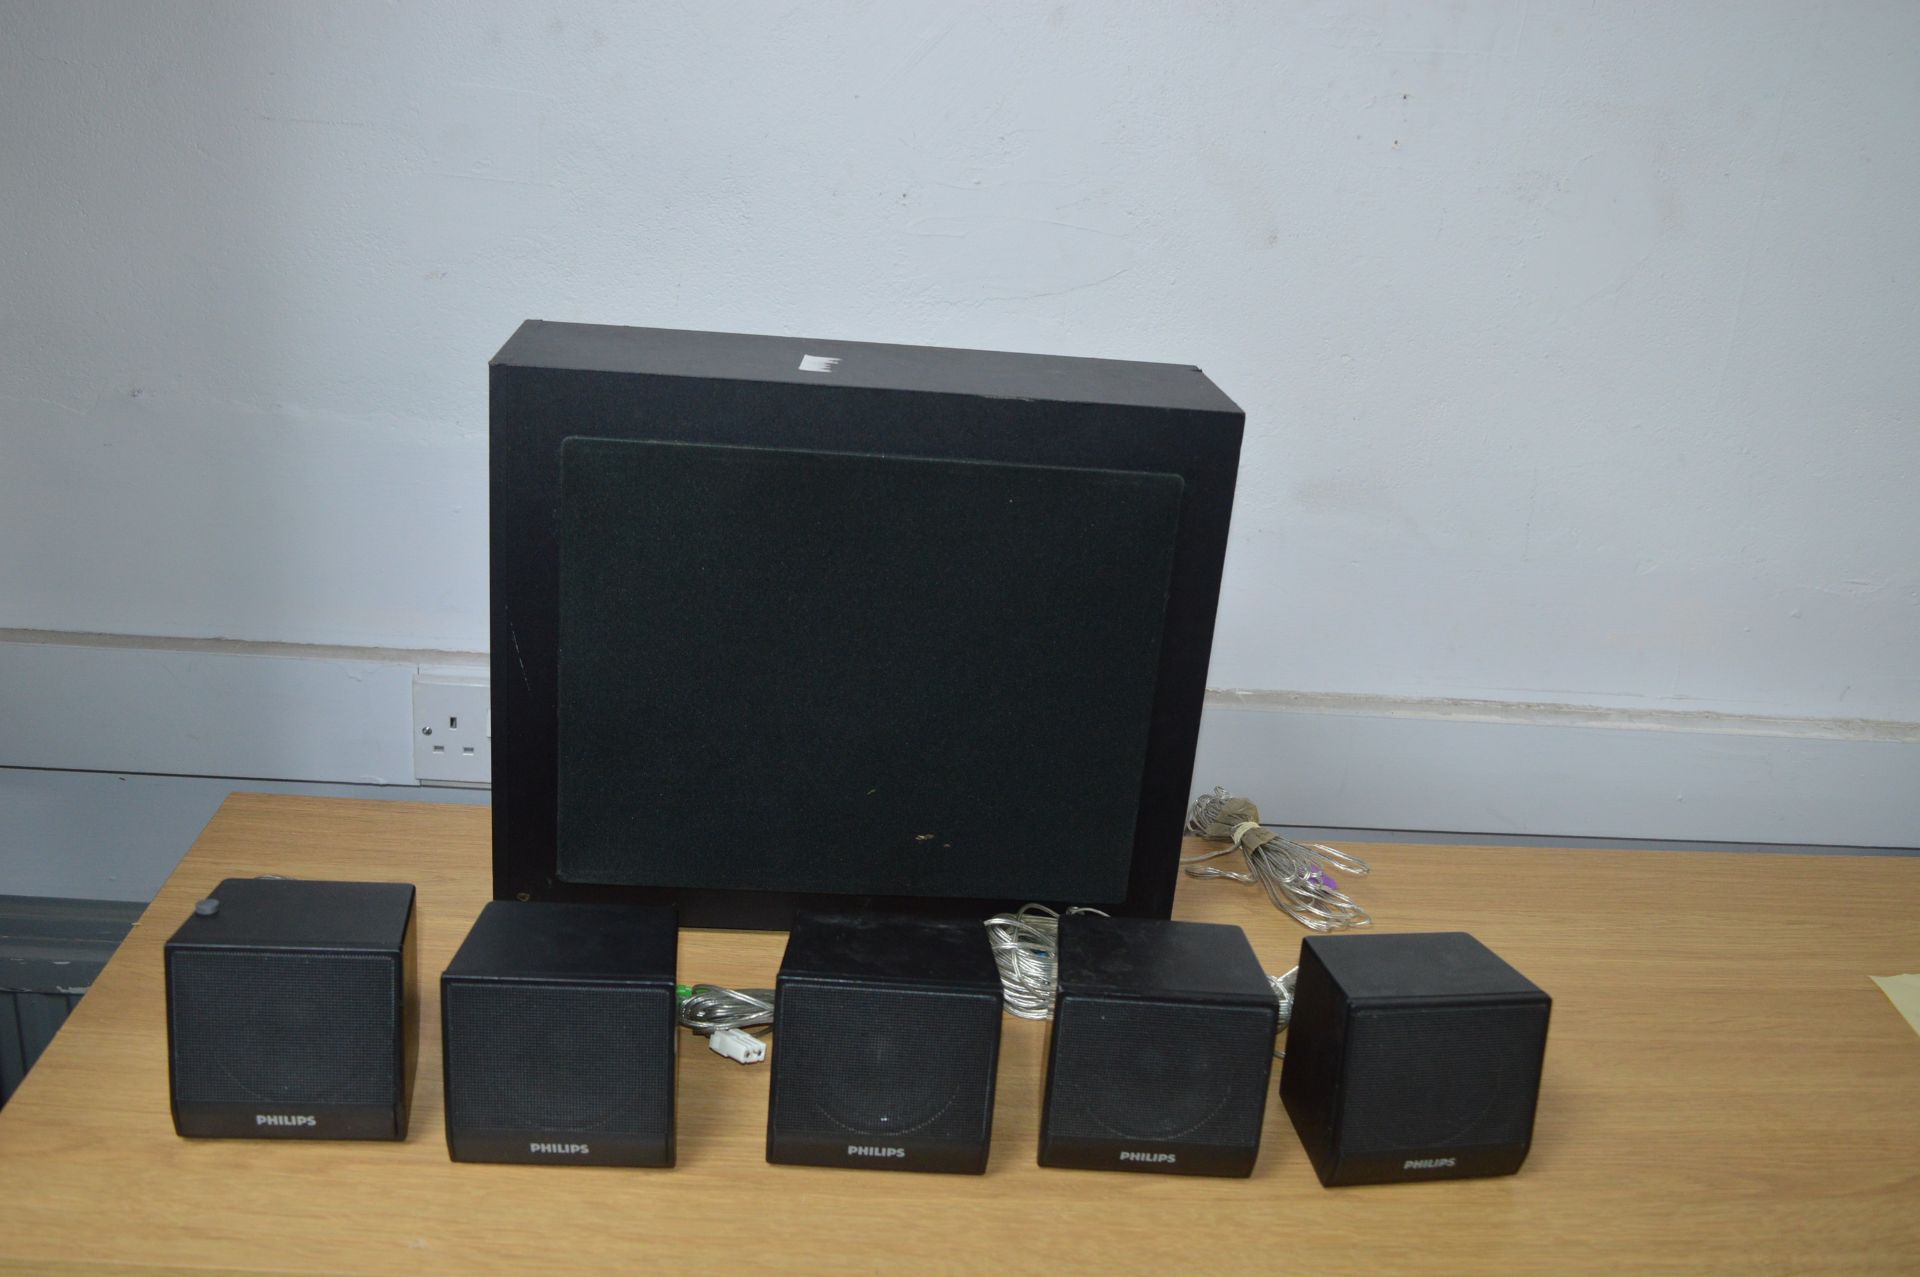 Philips Surround Sound System; 1x Subwoofer, 5x Mini Speakers